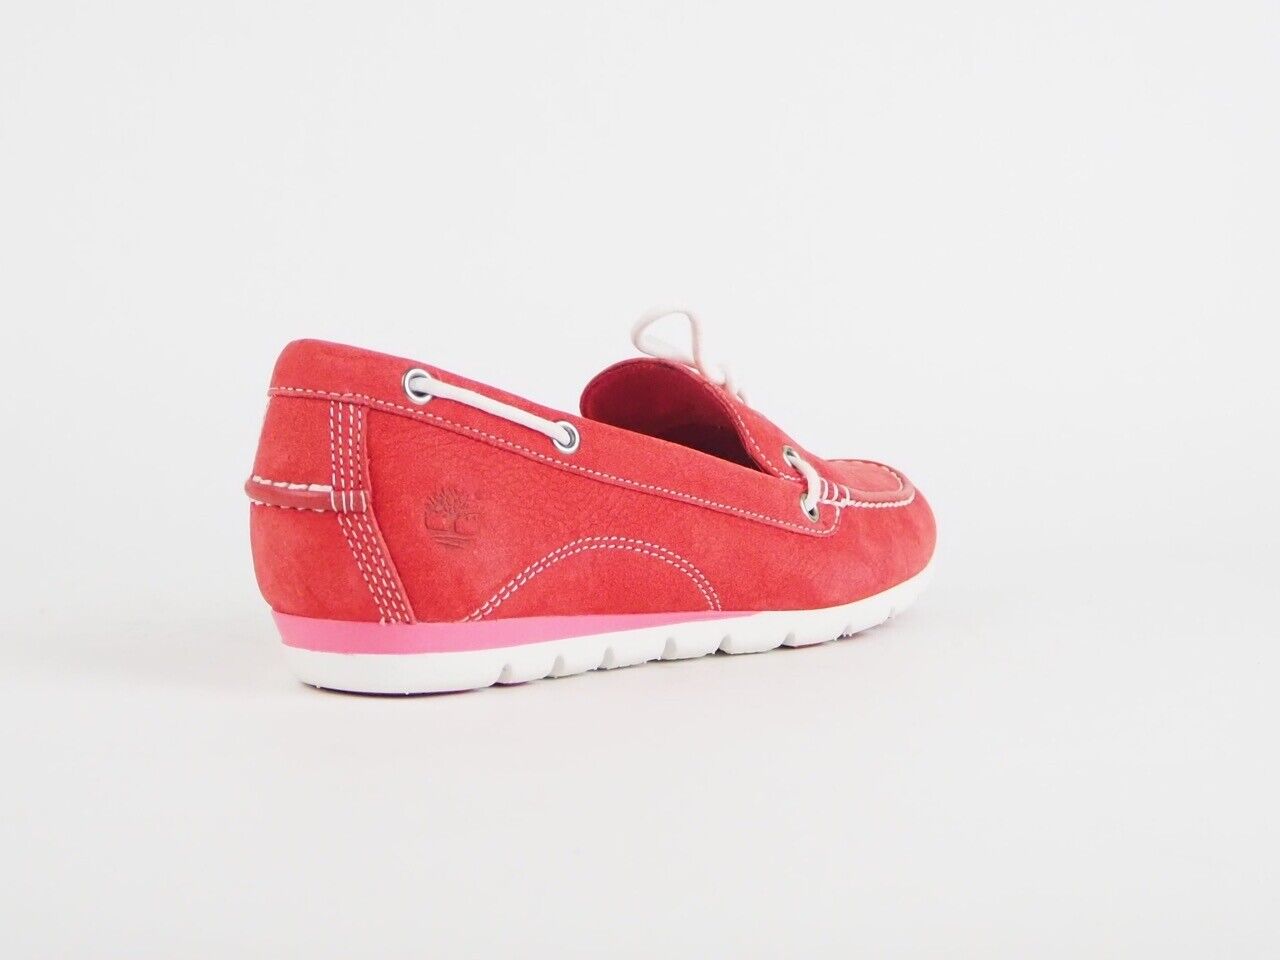 Ladies Timberland Ek Harbrside 1Eye Boat Red 8420B Leather Flat Slips On Shoes - London Top Style